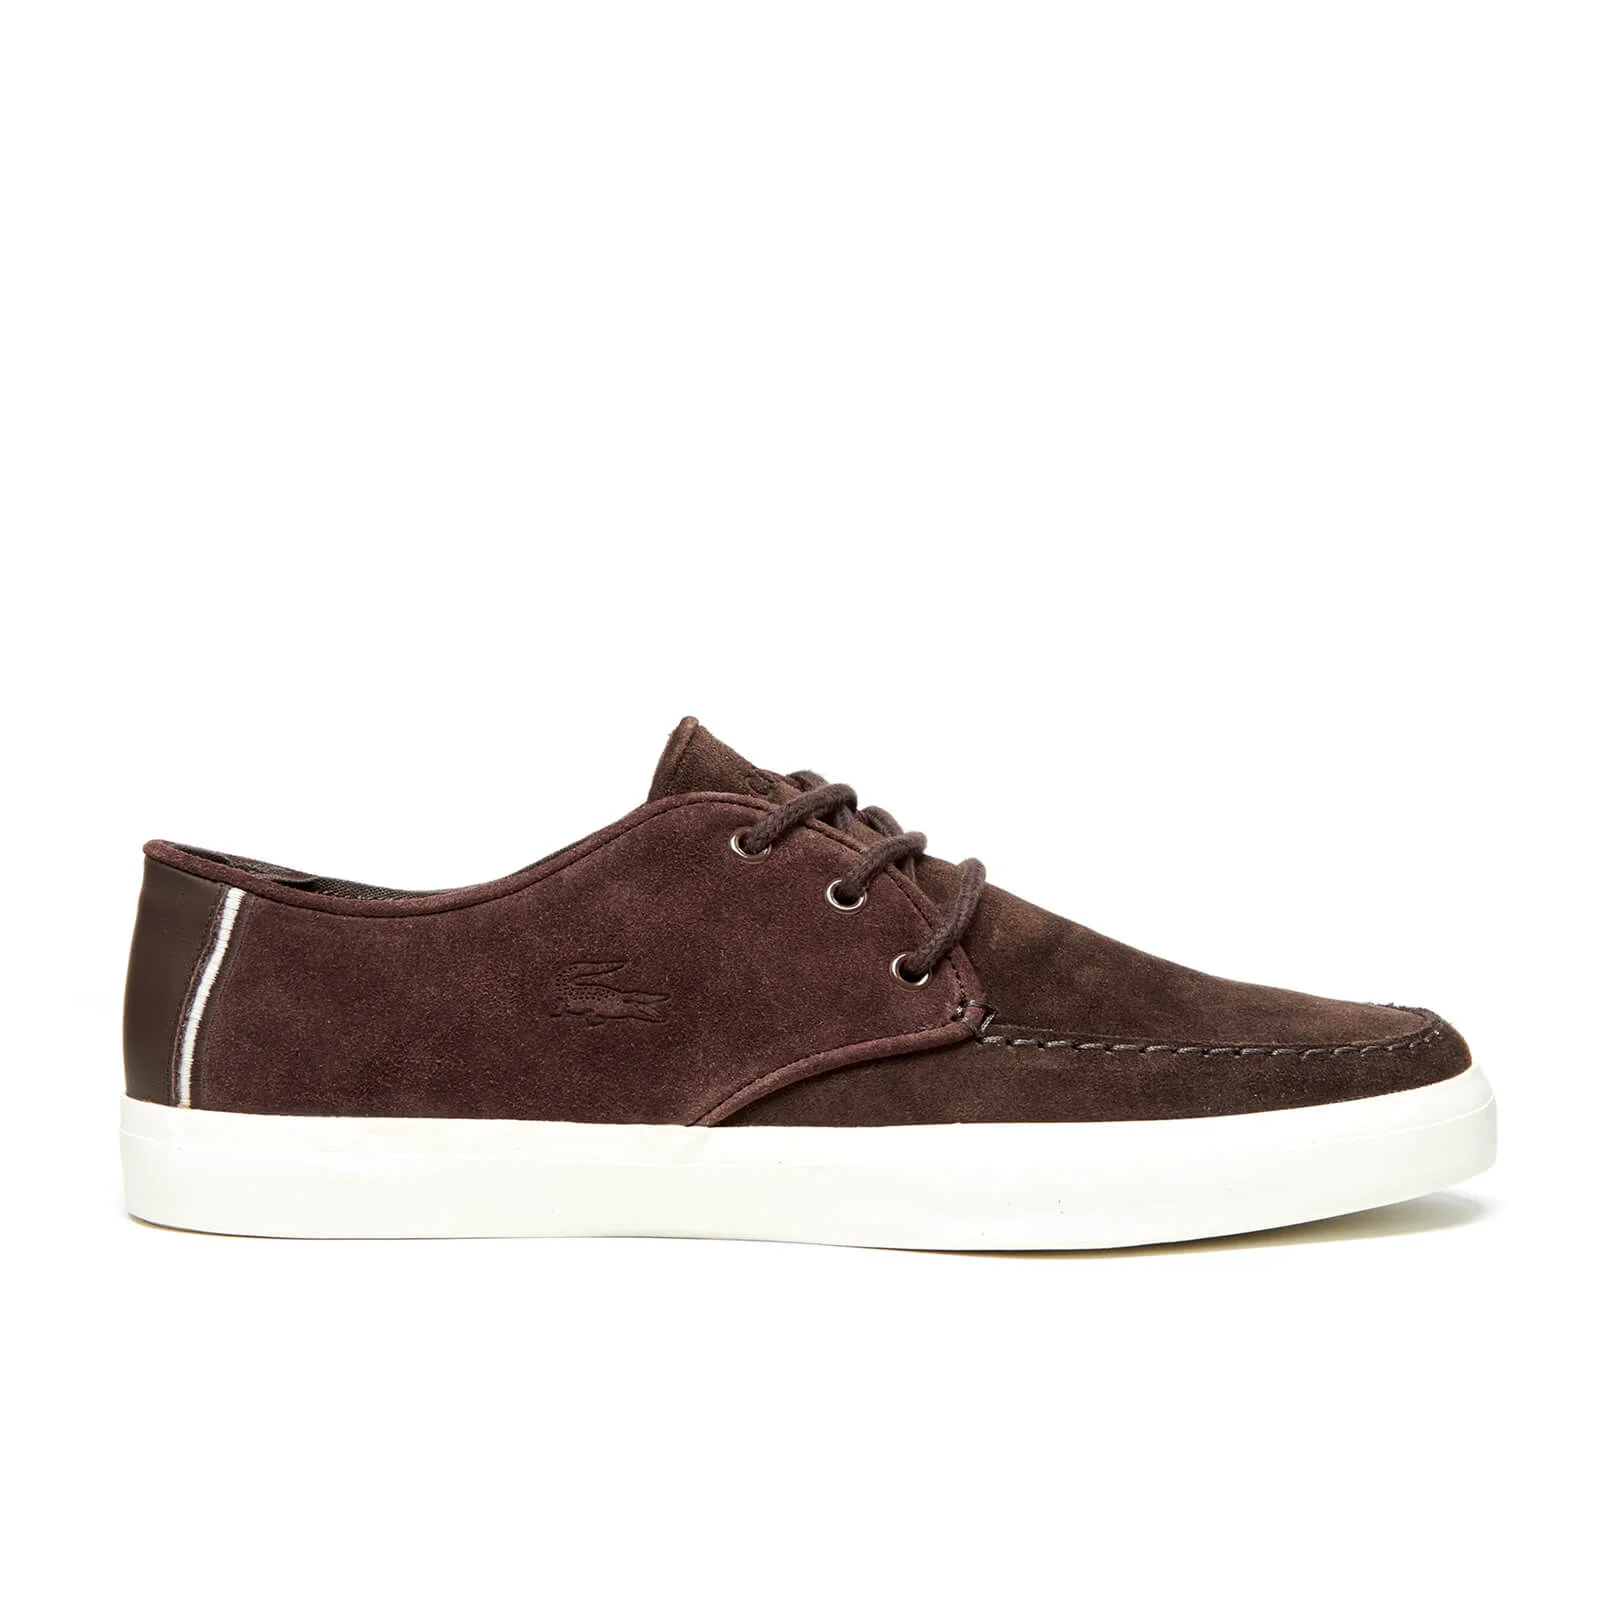 Lacoste Men's Sevrin 116 1 Cam Boat Shoes - Dark Brown Image 1